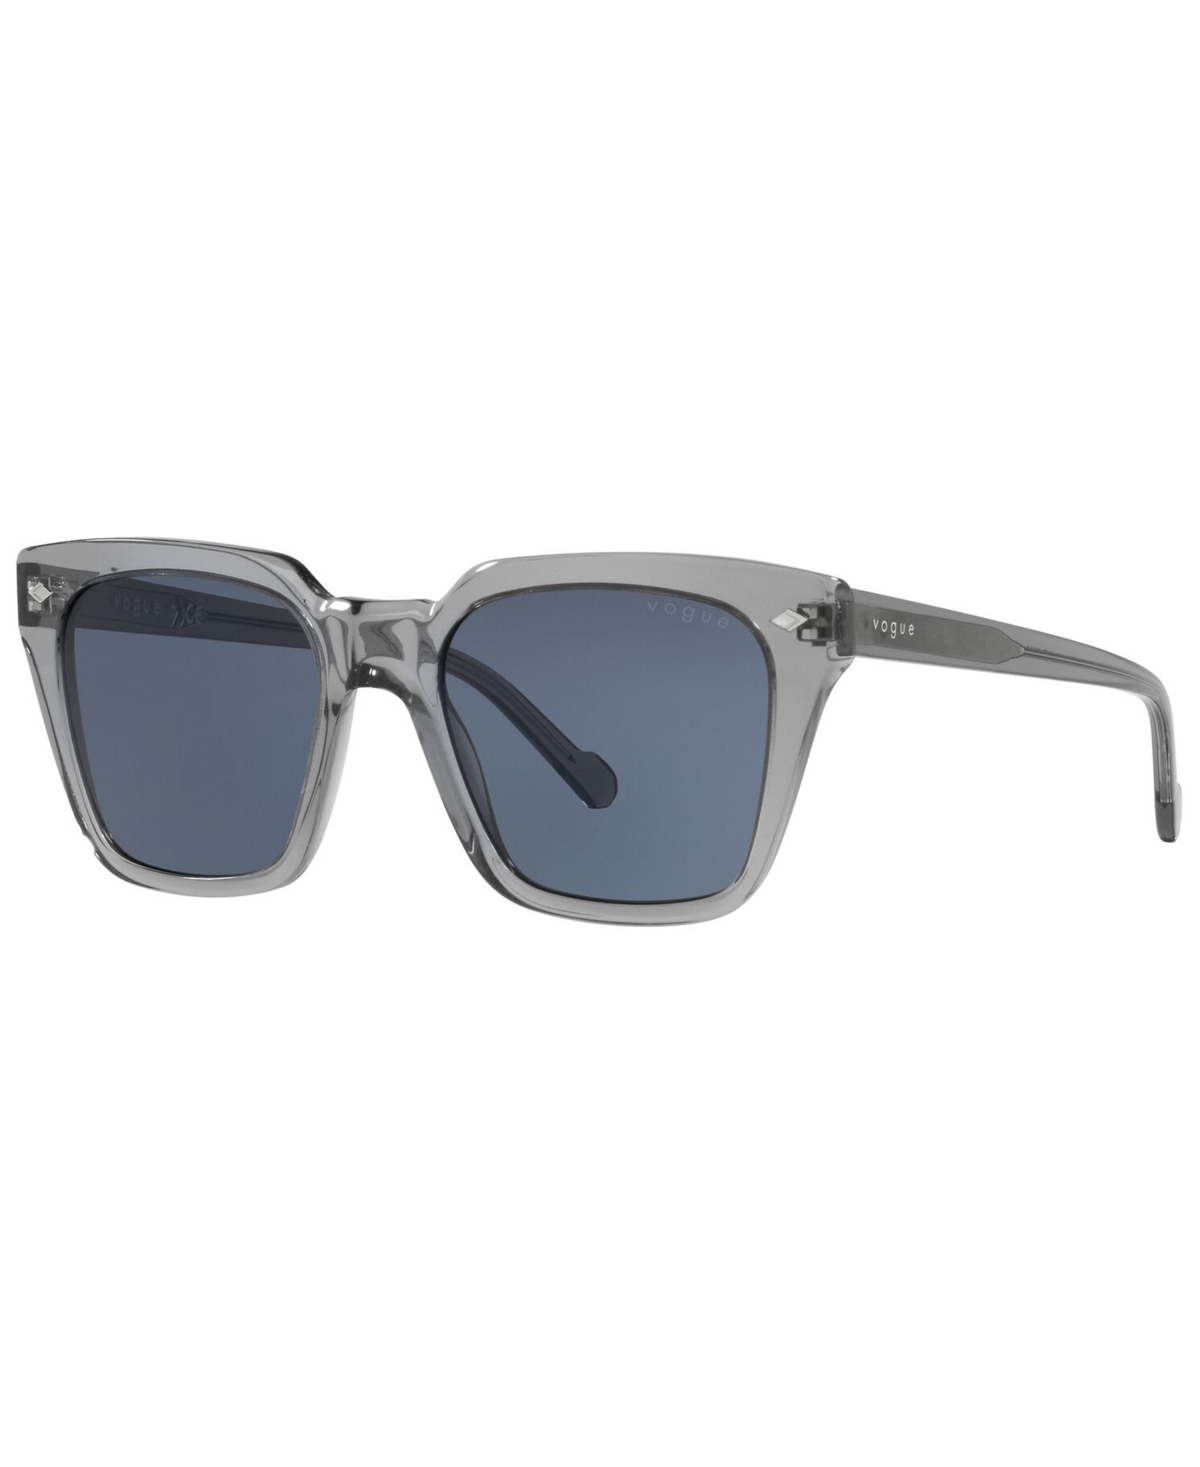 Men's Sunglasses, VO5380S - TRANSPARENT GREY/DARK BLUE